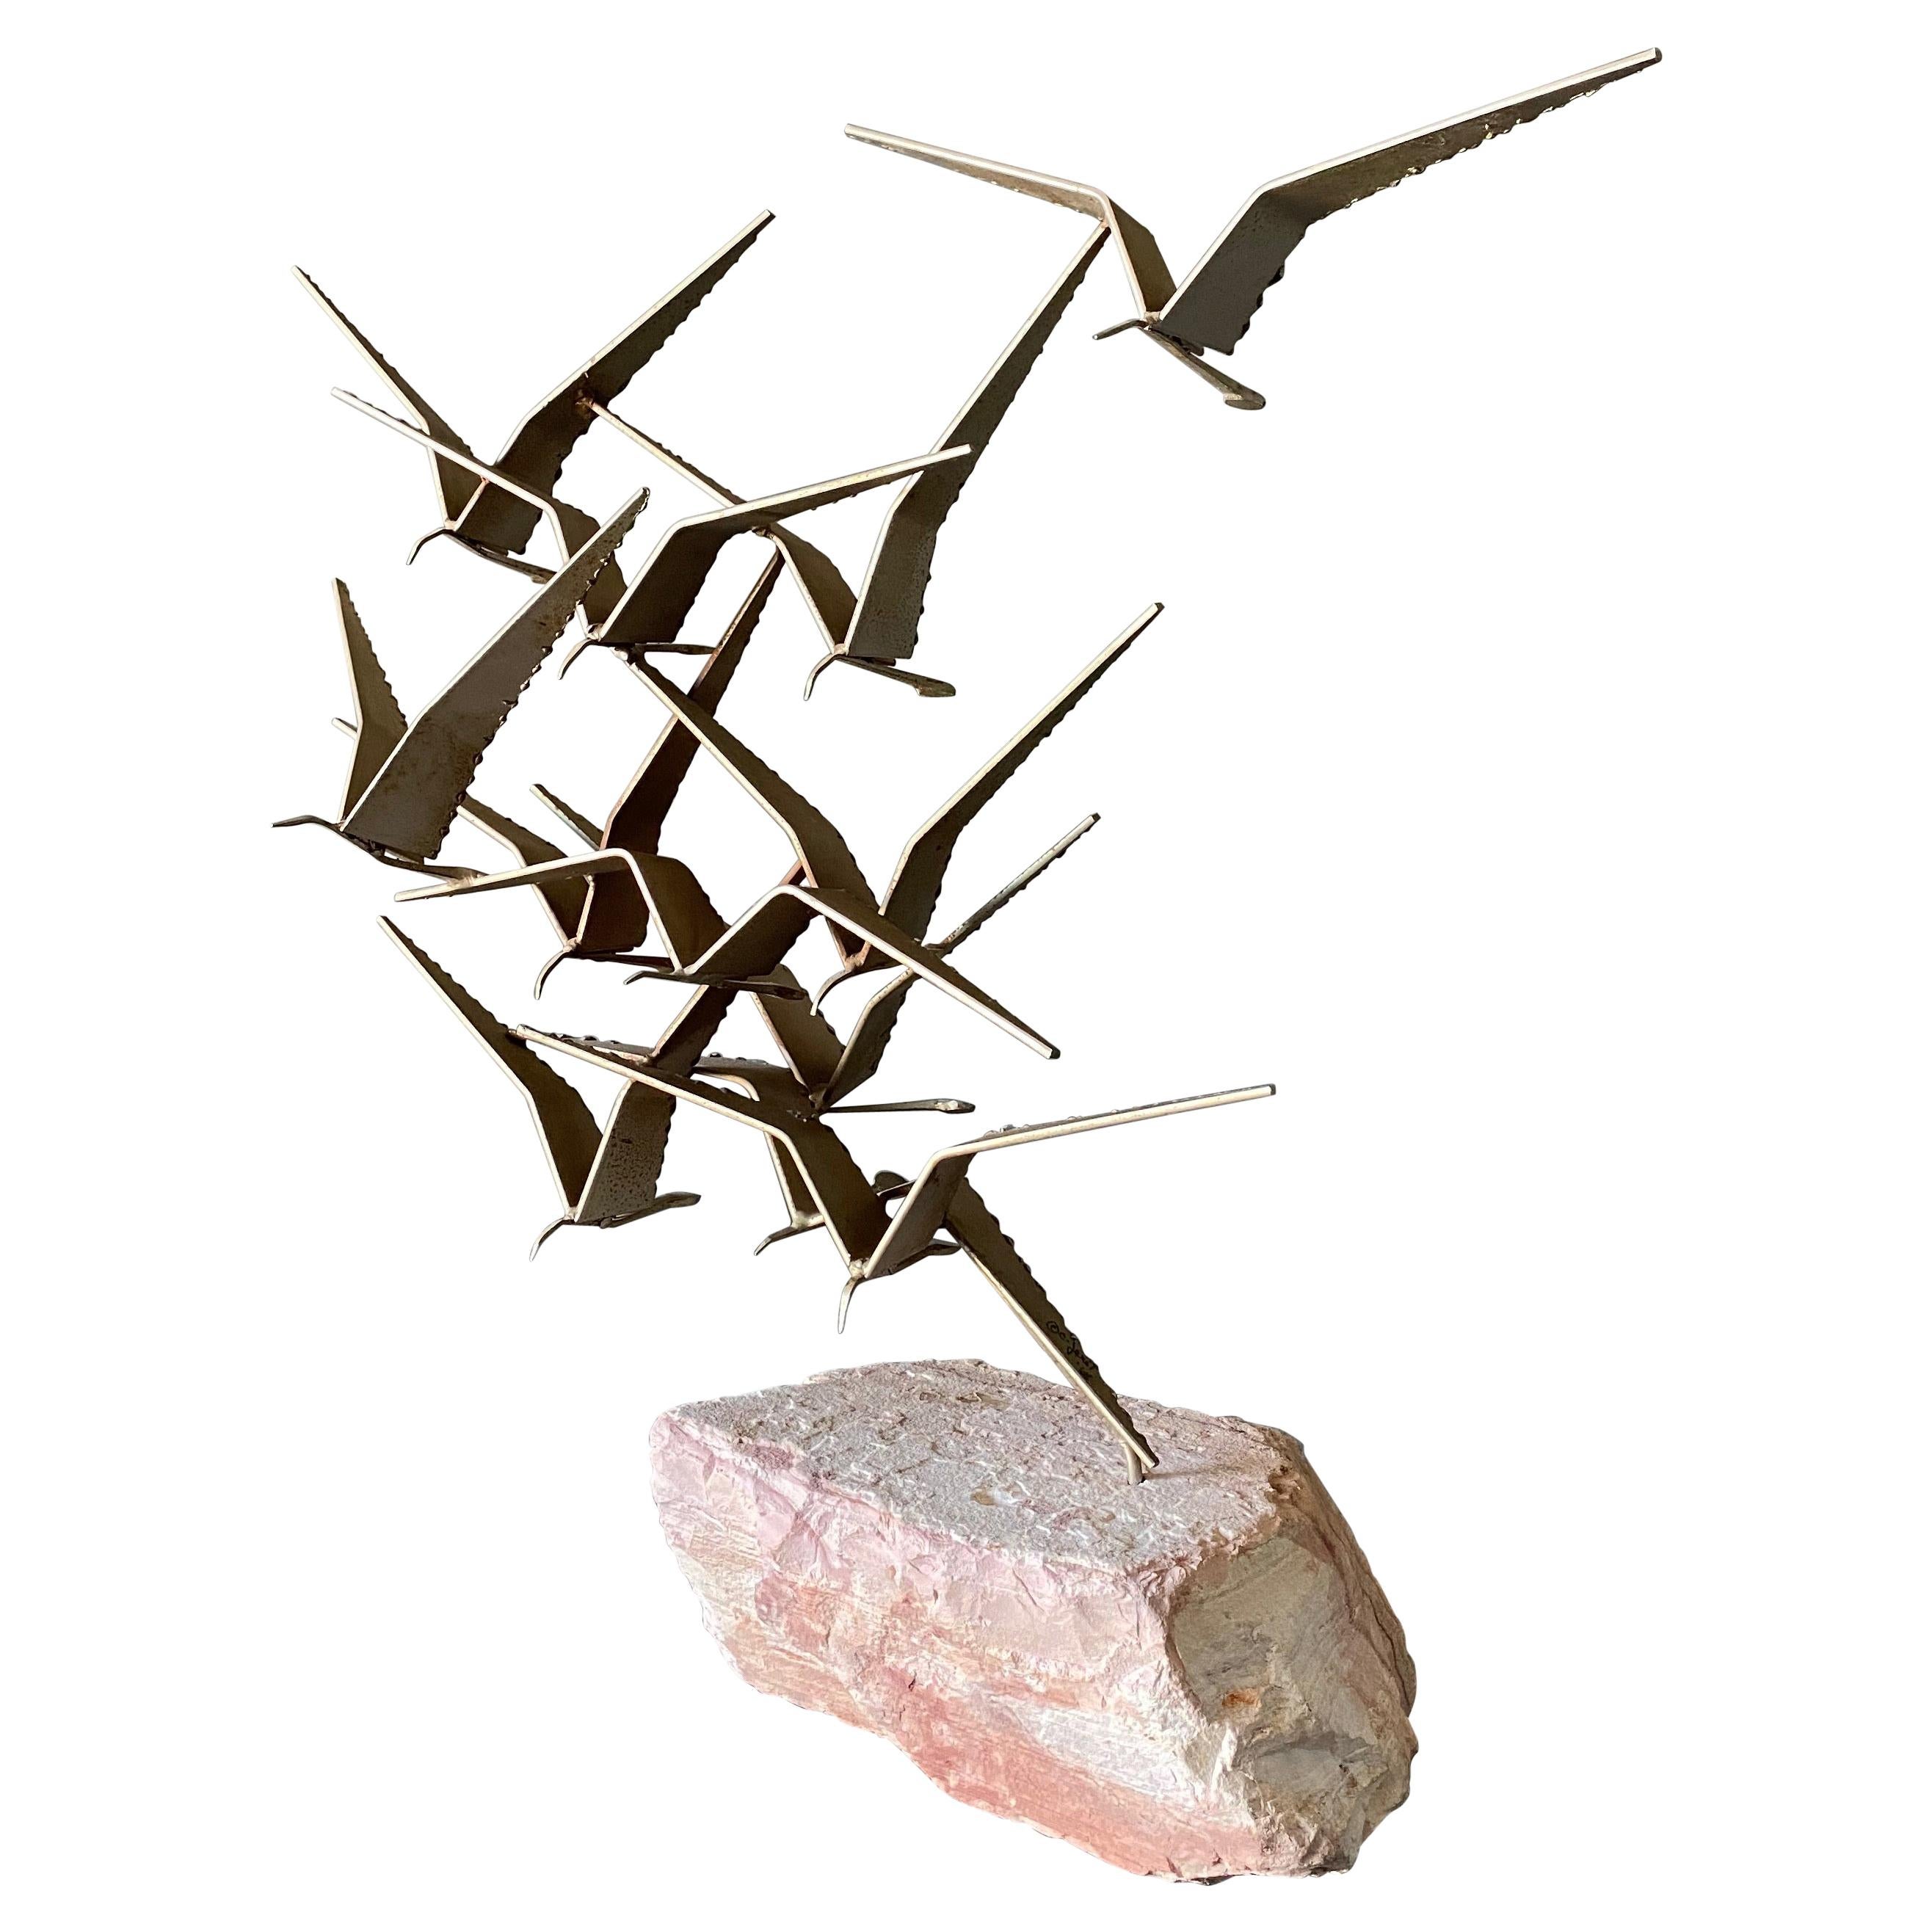 Curtis Jere "Birds in Flight" Sculpture 1968 